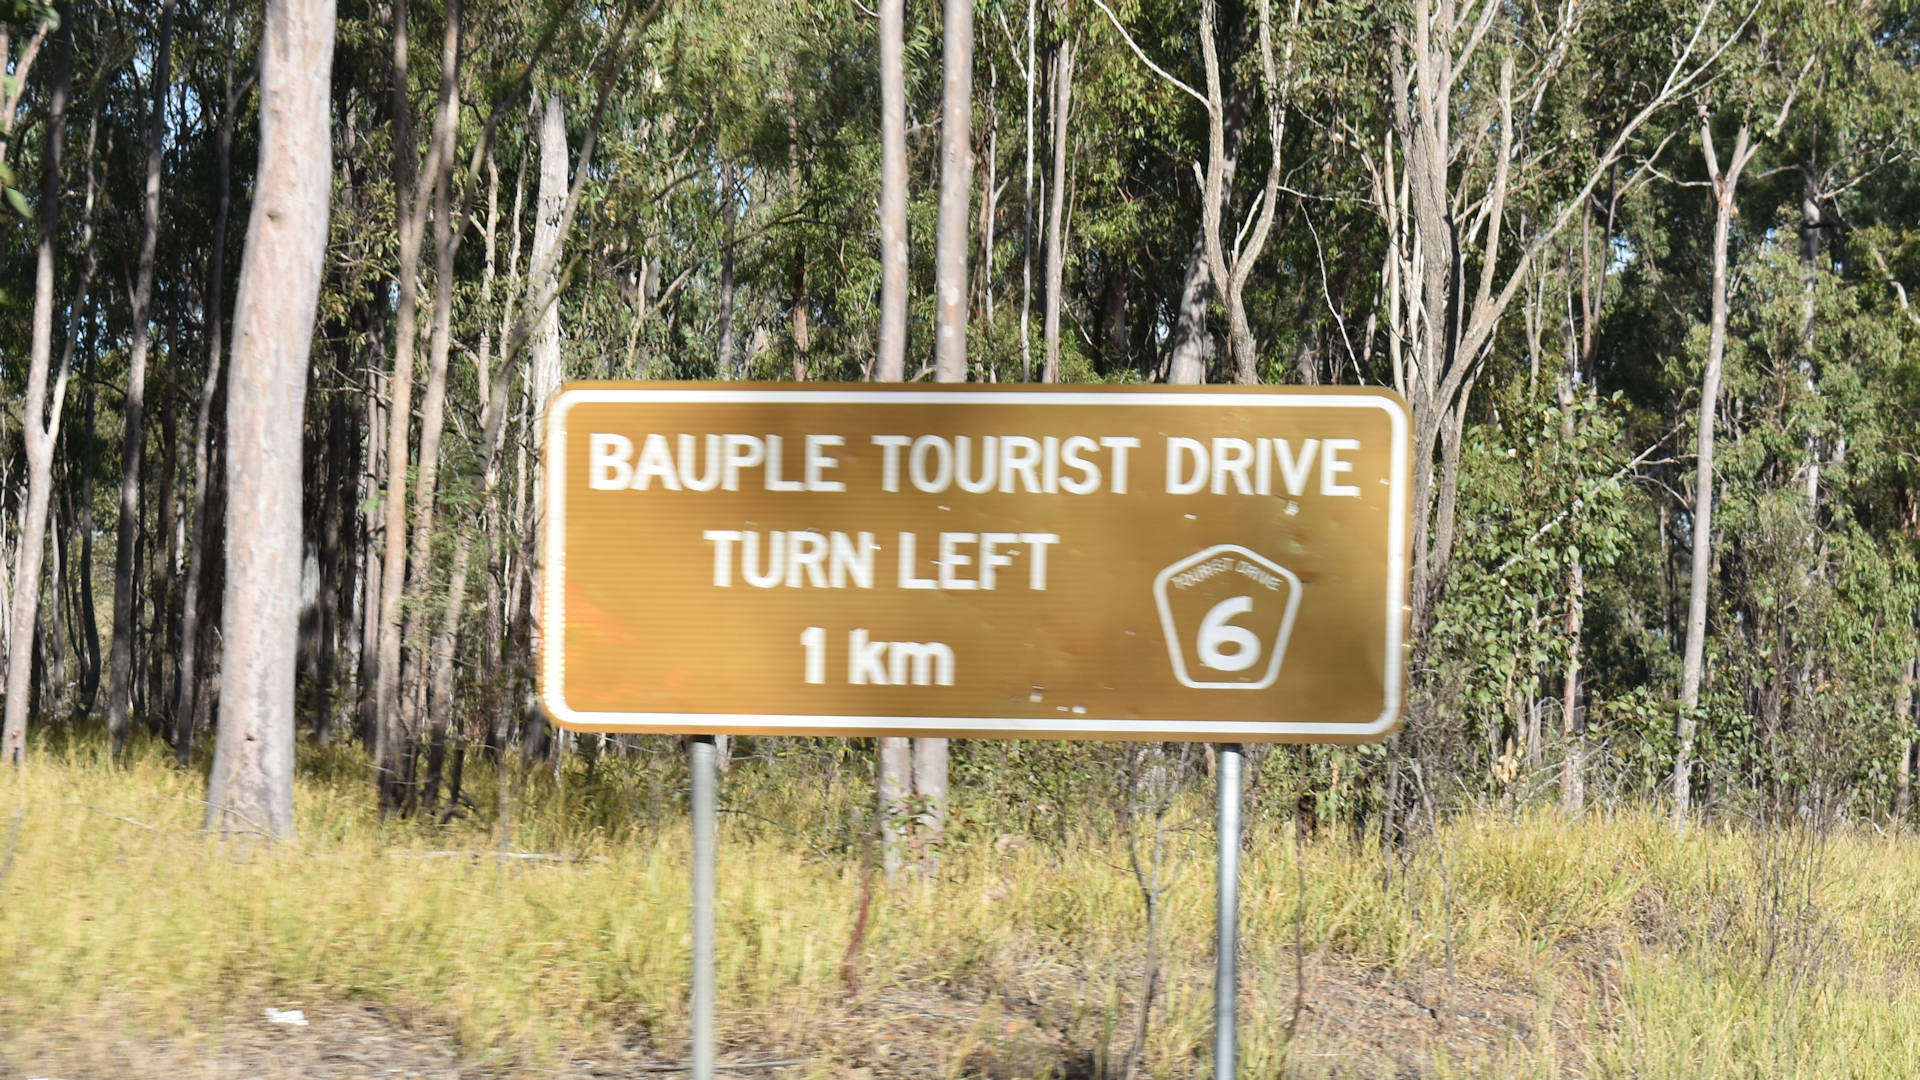 Bauple Tourist Drive, Turn Left 1km, Tourist Drive 6